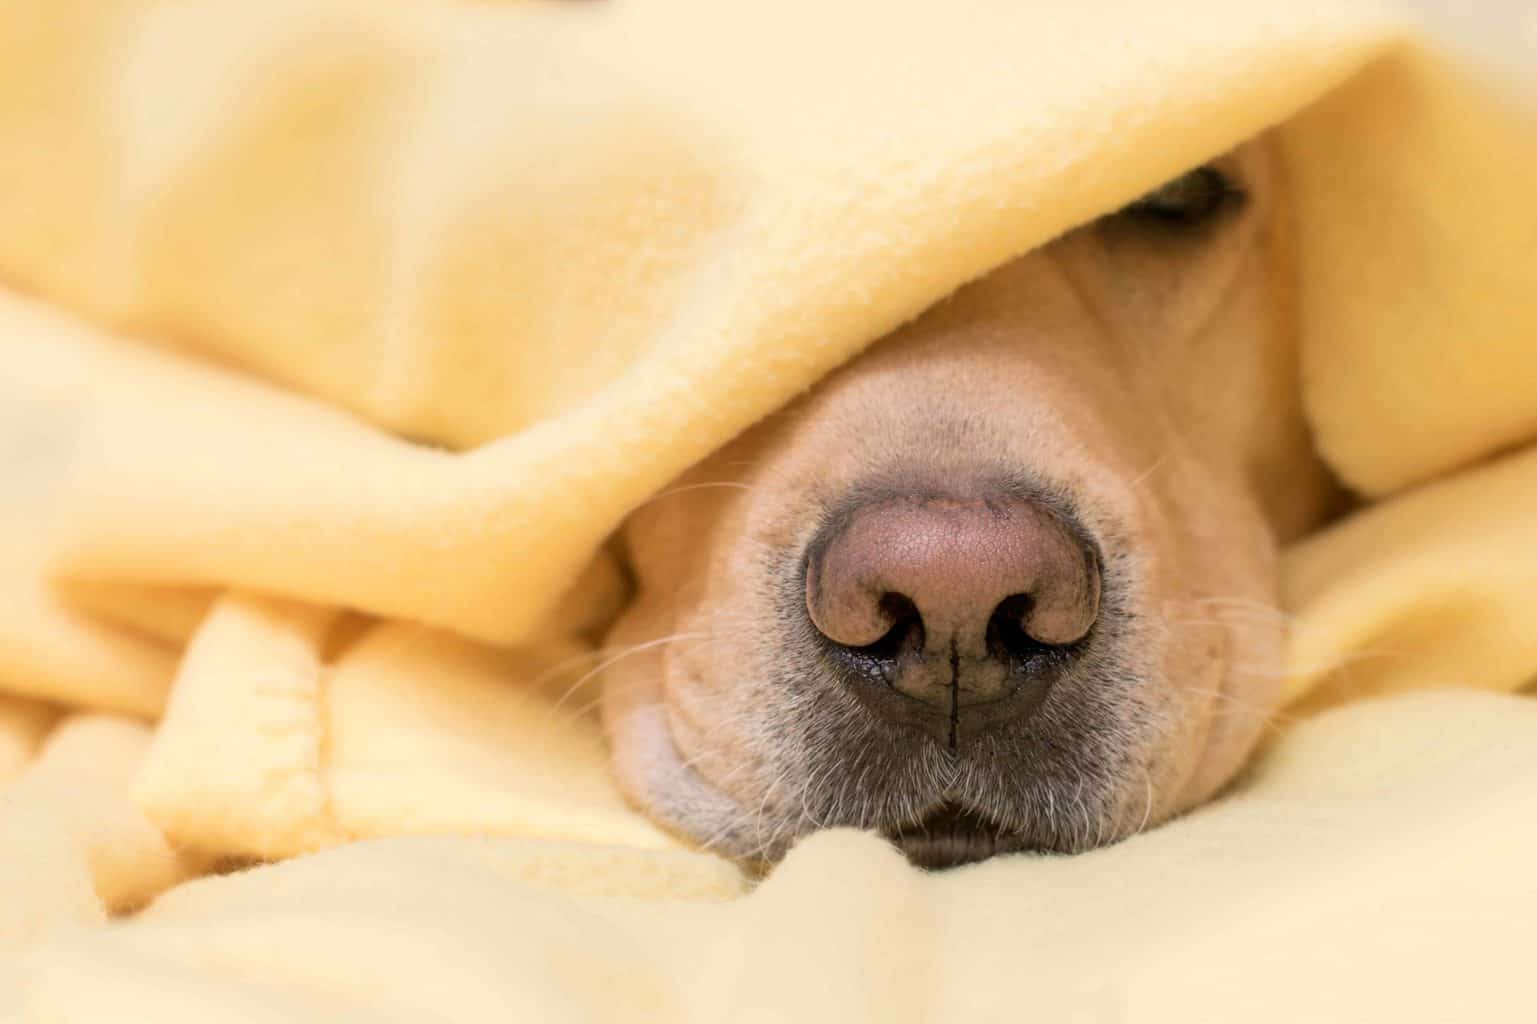 Sleepy dog snuggles under a blanket.